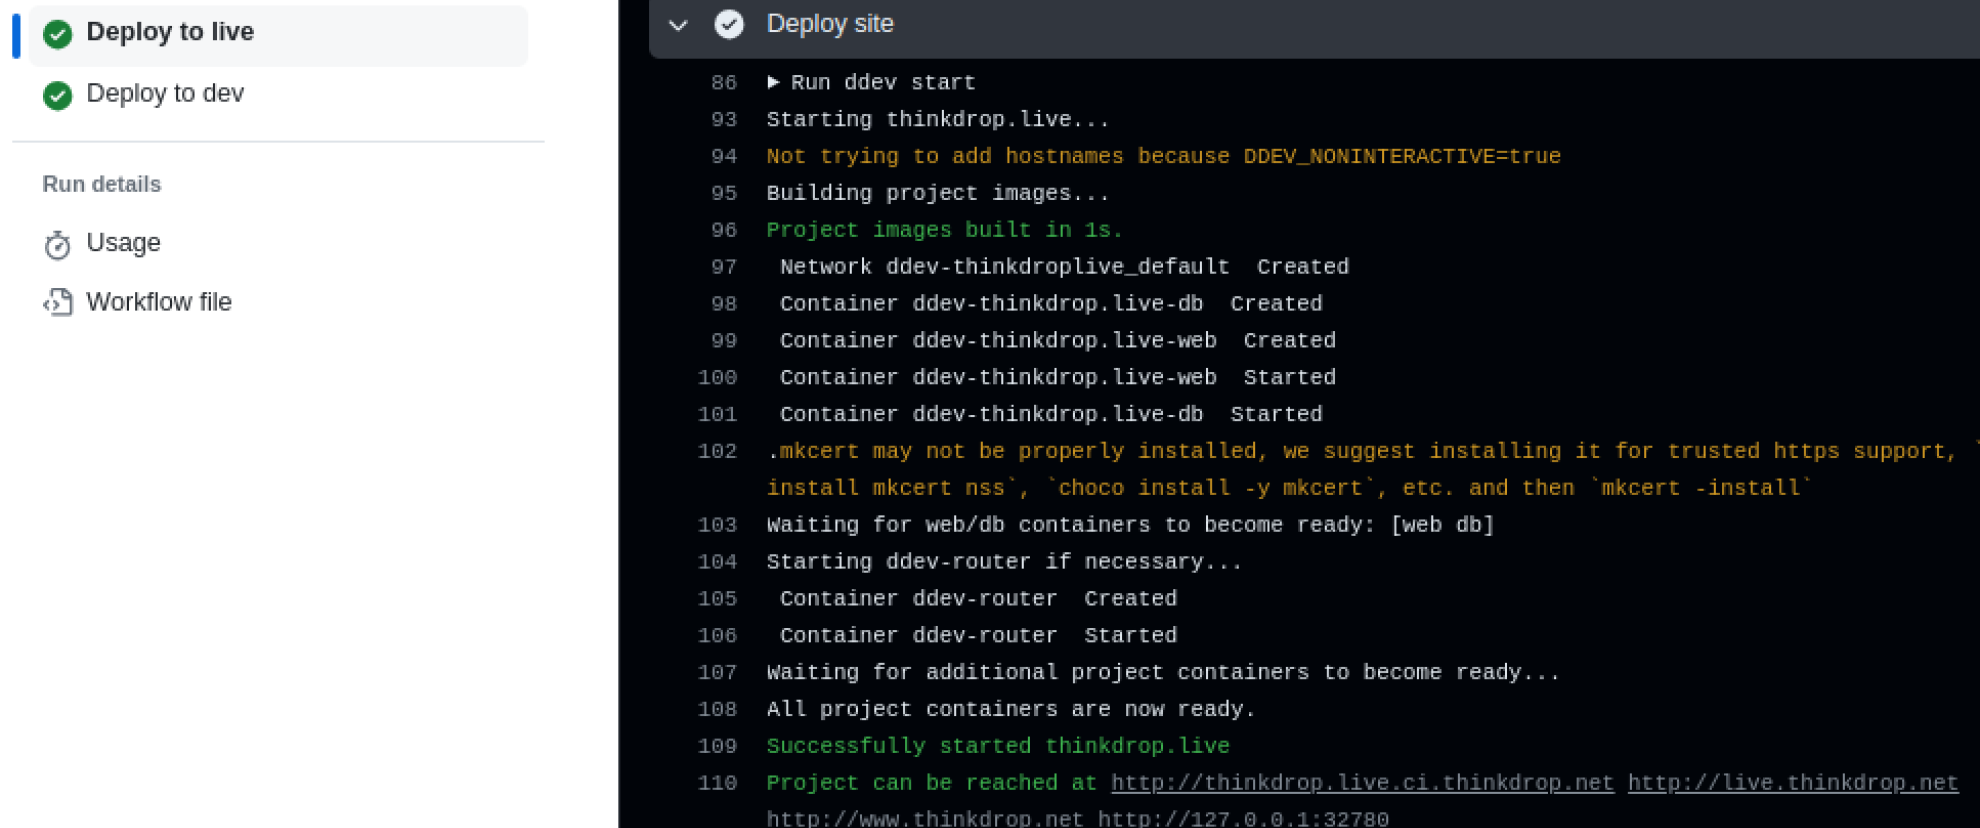 DDEV Start running on a private server in GitHub Actions.